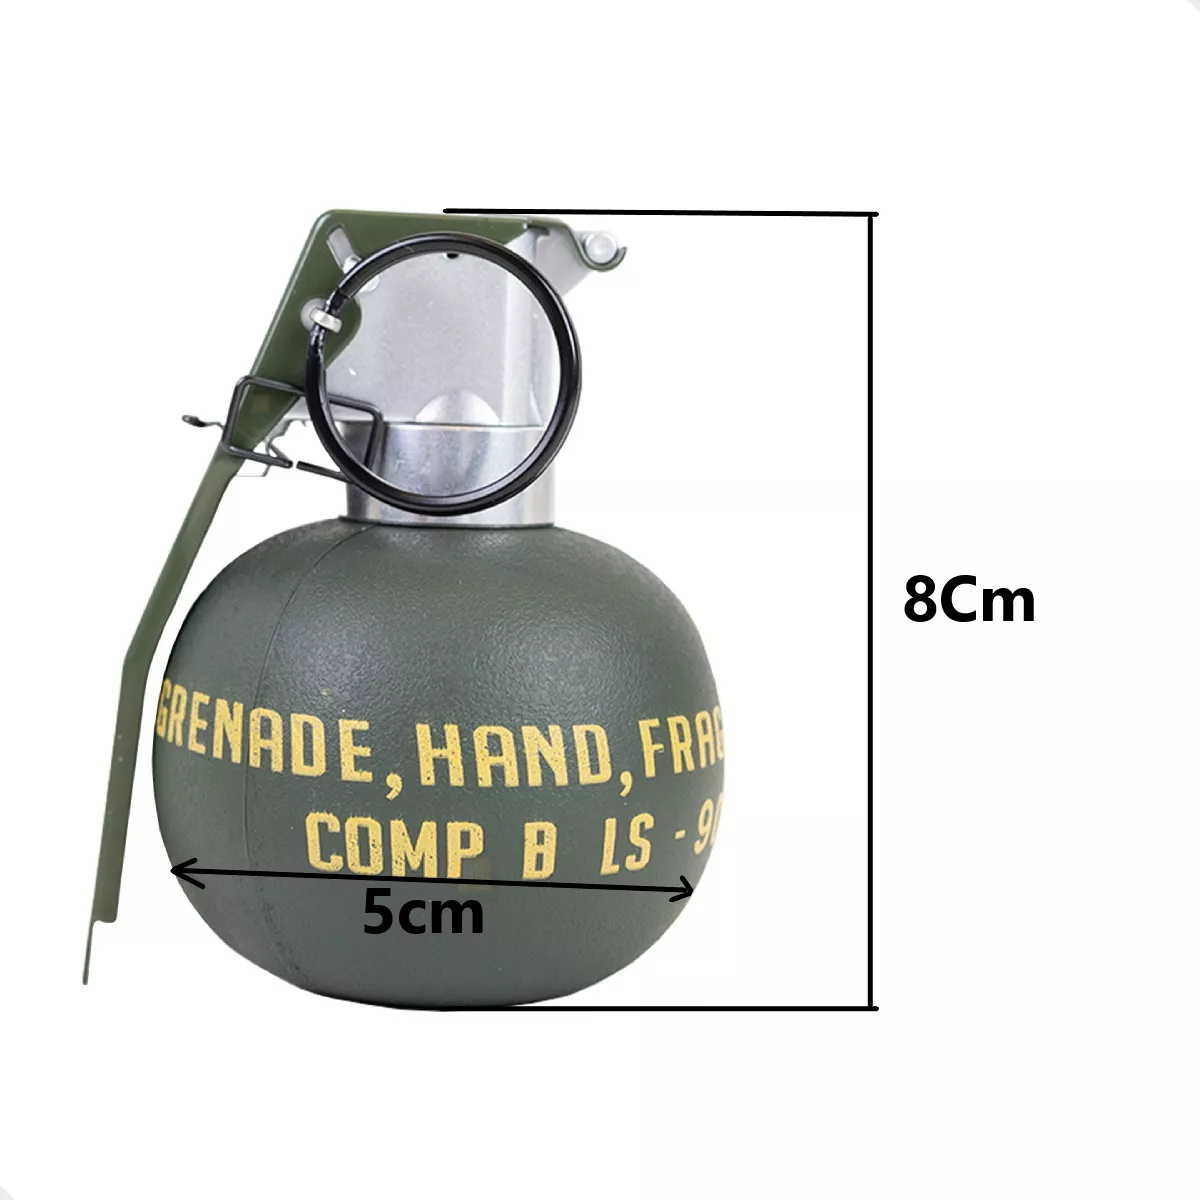 Segunda imagem para pesquisa de granadas airsoft